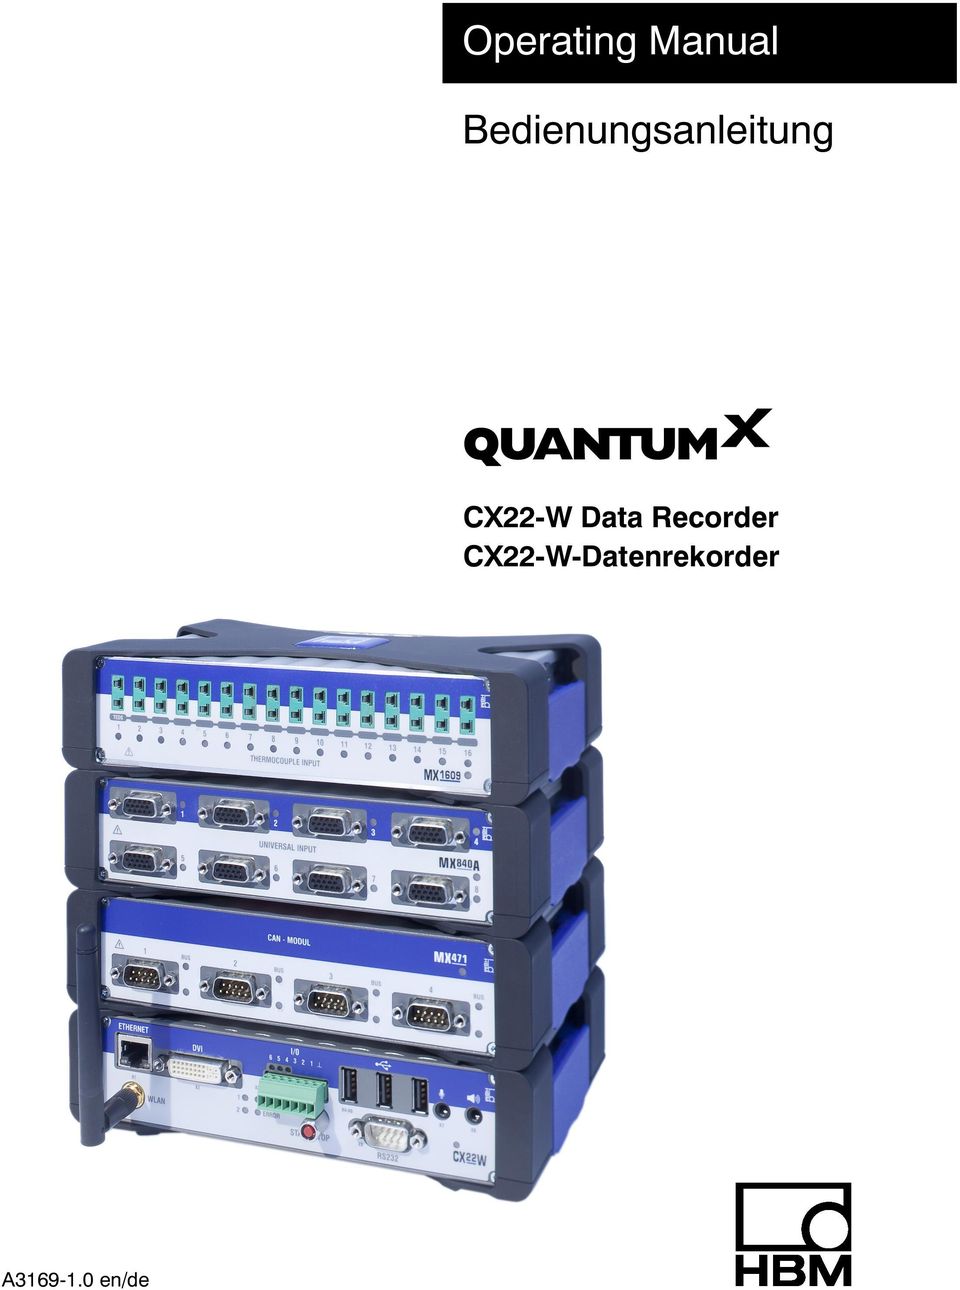 QuantumX CX22 W CX22 W Data